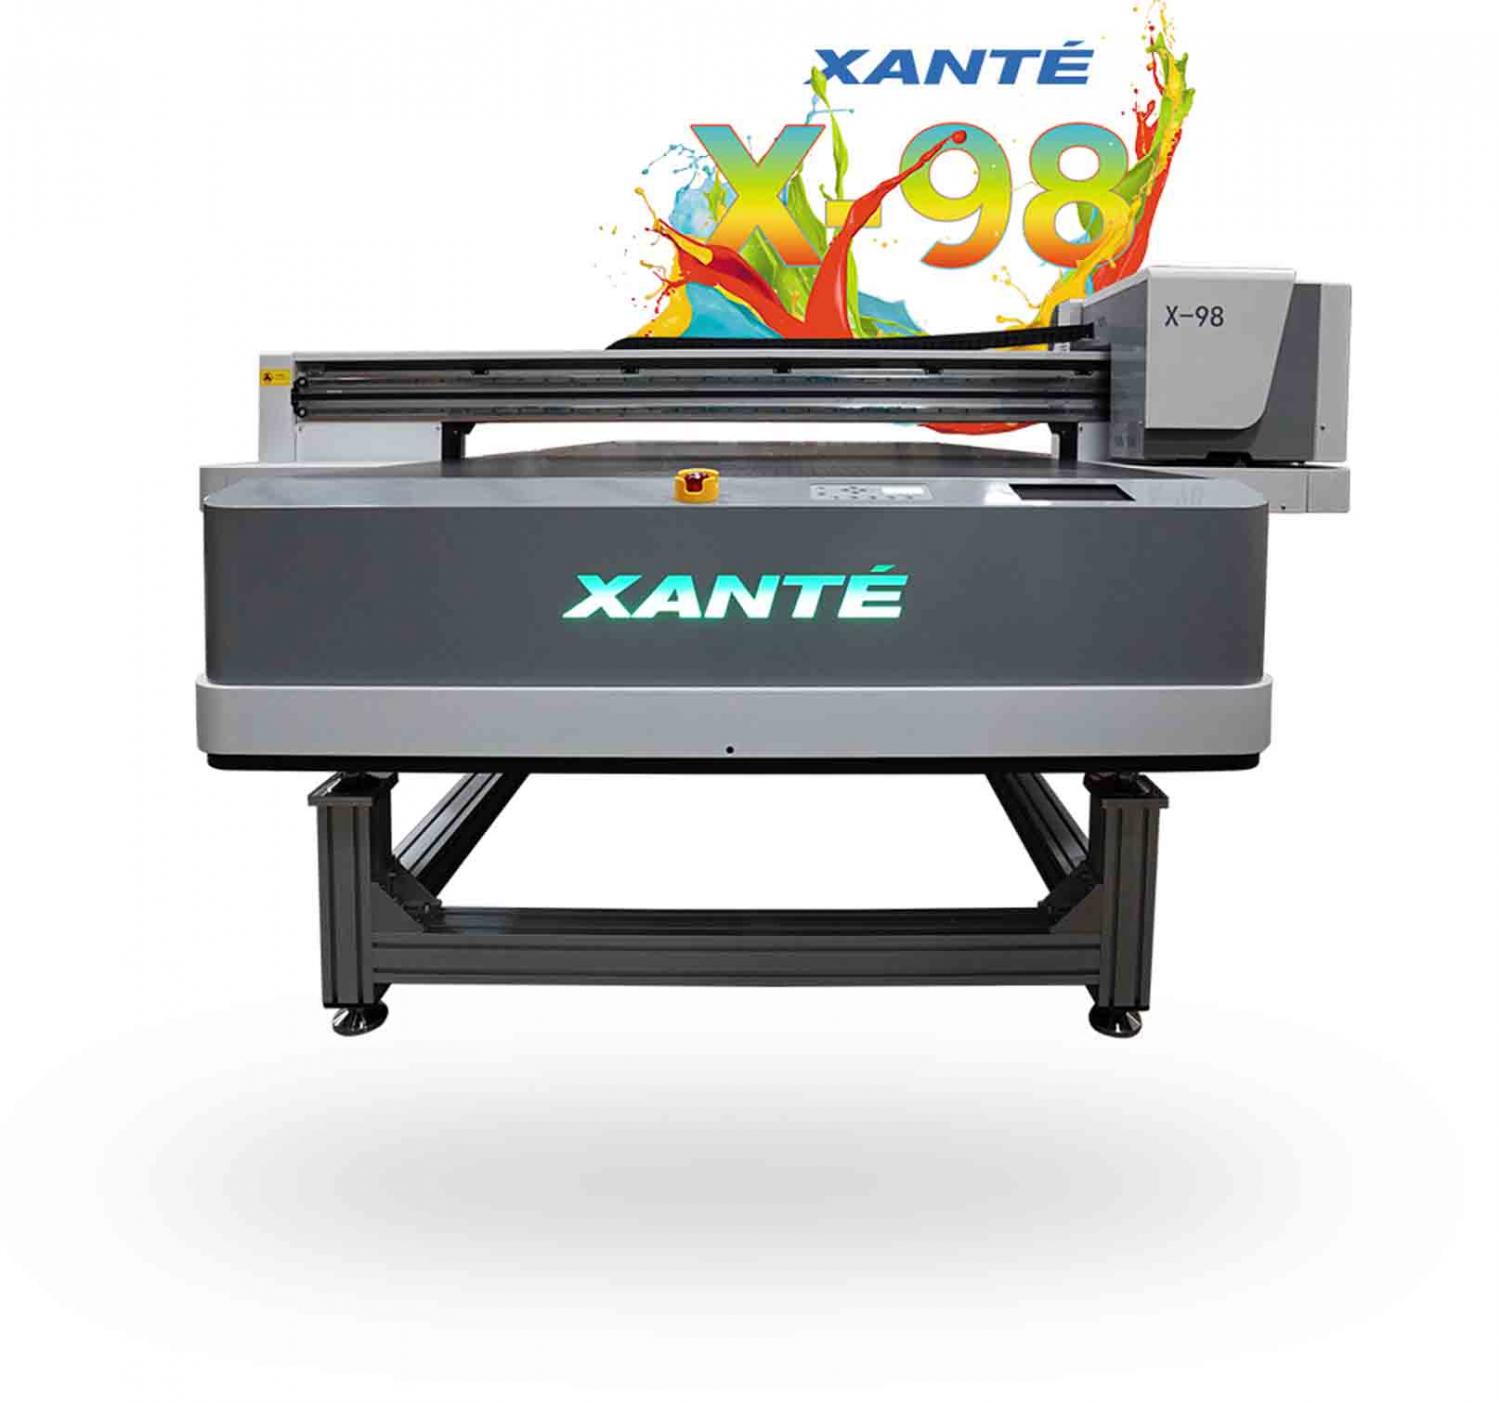 Xante X-98 Flatbed UV Printer 